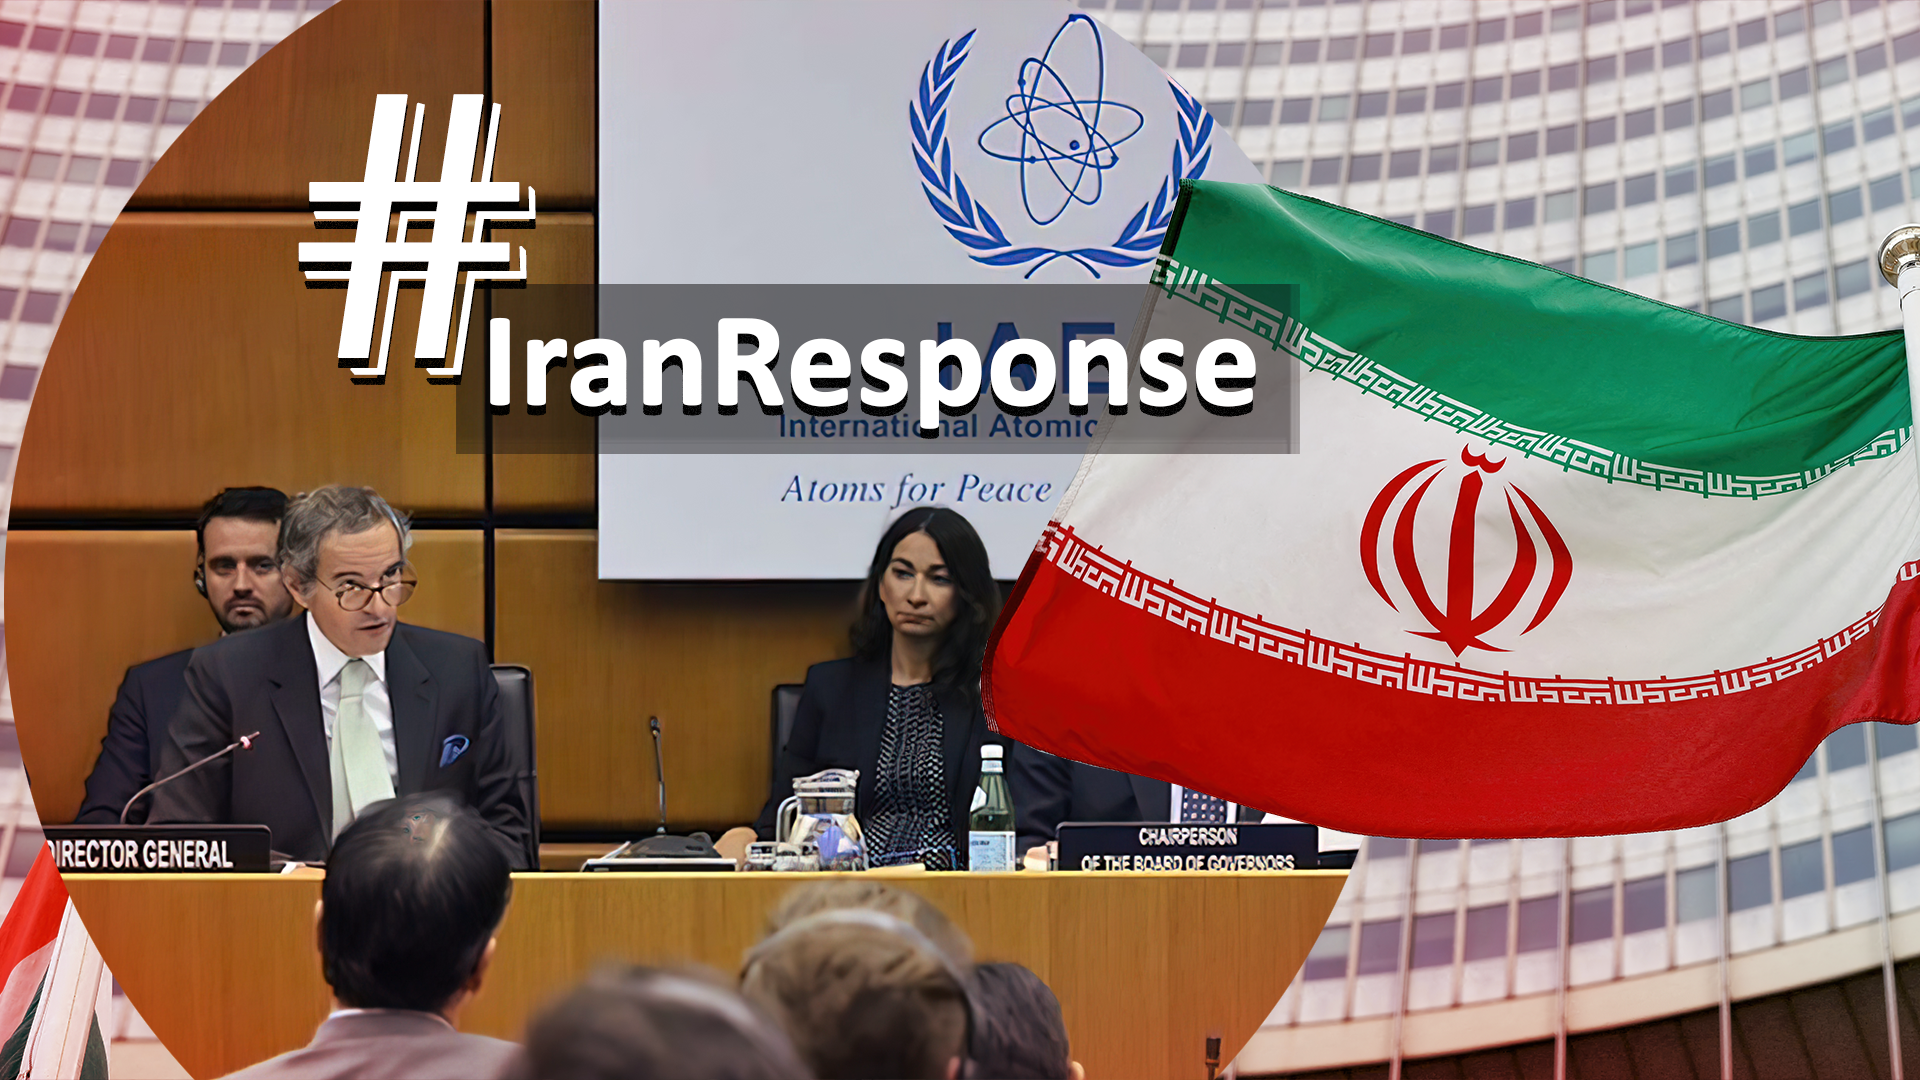 #IranResponse